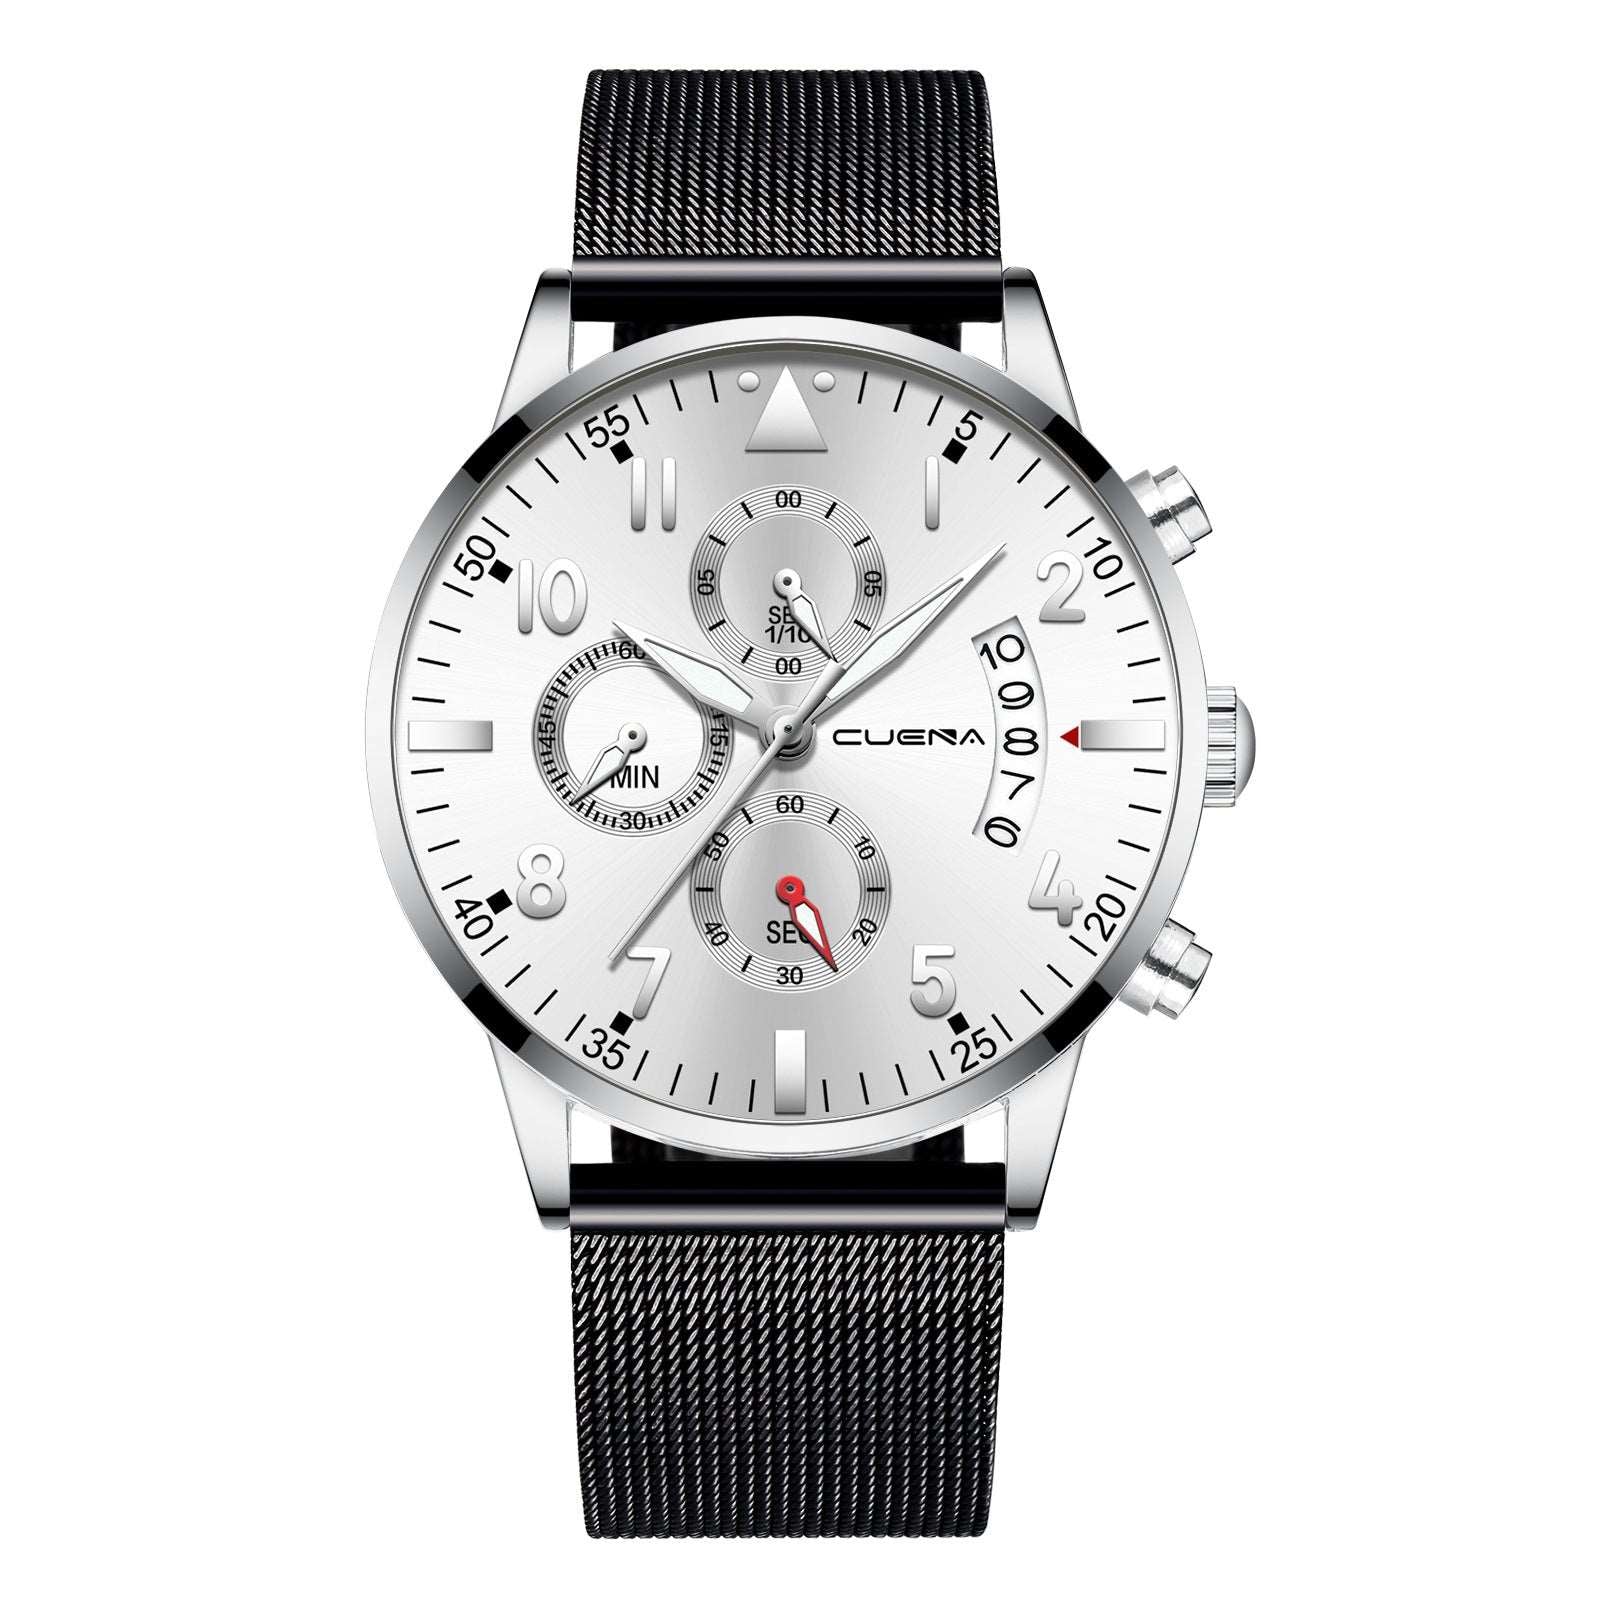 Mens Stainless Steel Calendar Quartz Wrist Watch - BELLADONNA